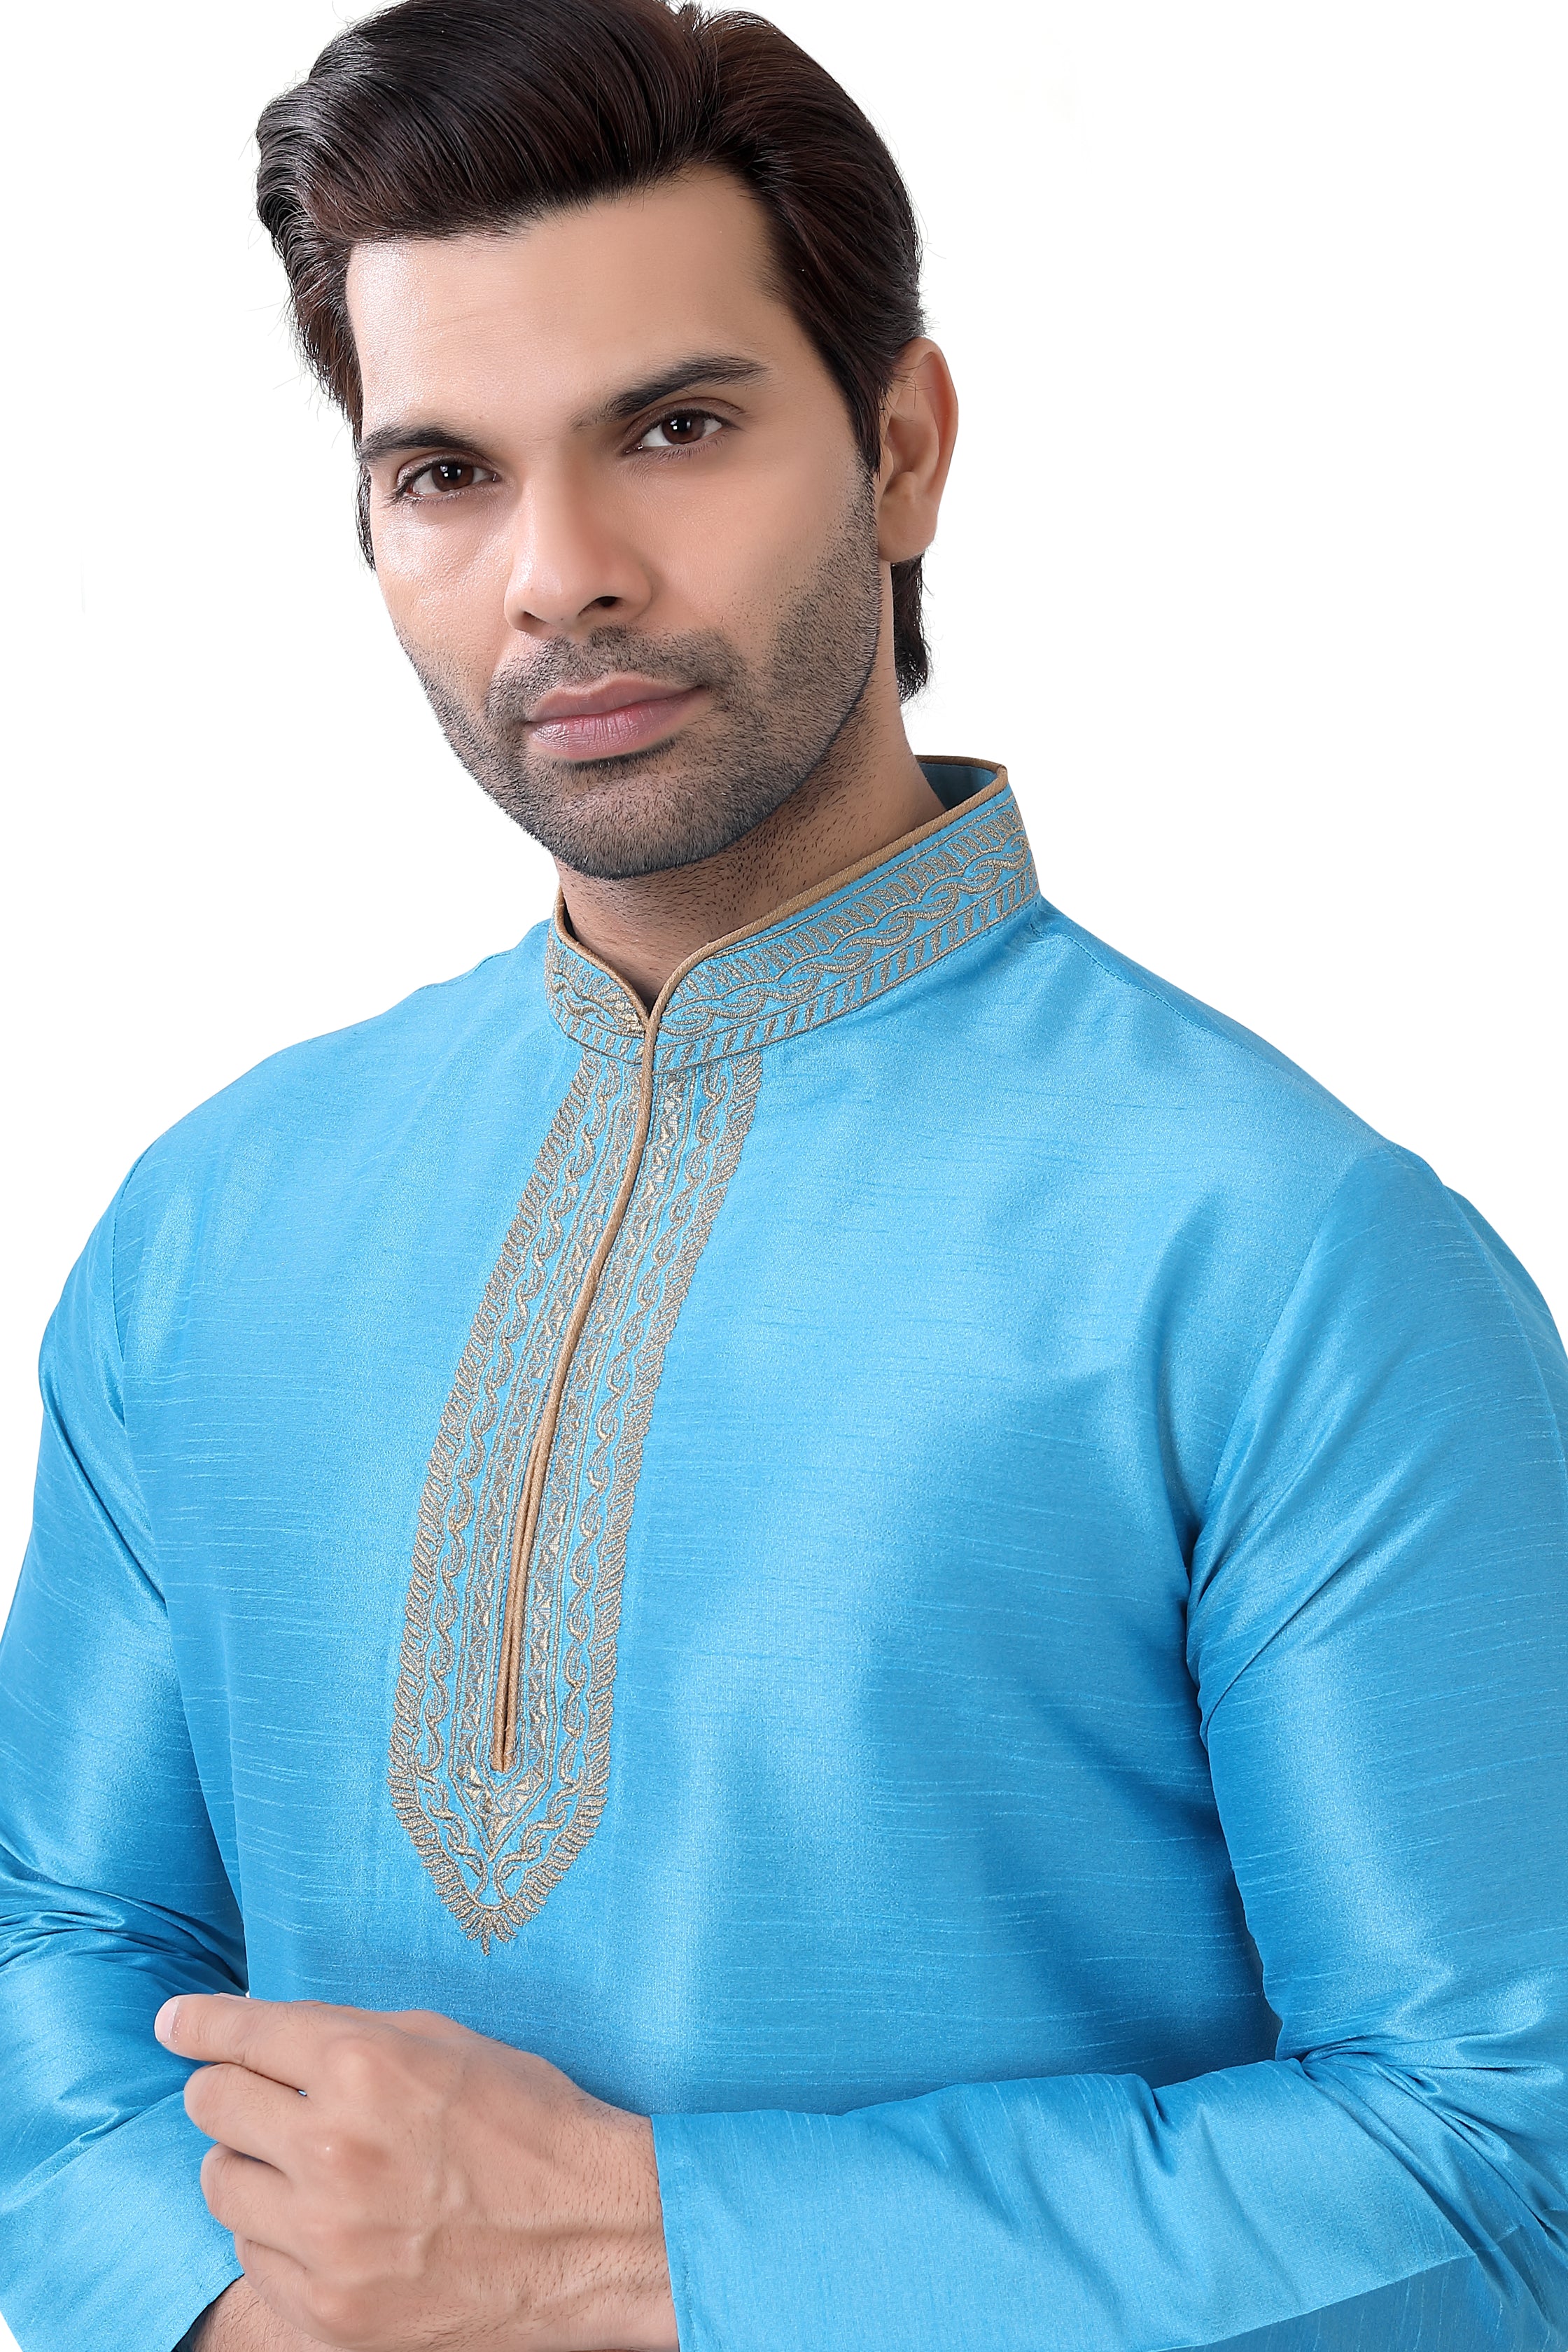 Banarasi Dupion Silk Short Kurta with embroidery in Light Blue color - Premium kurta pajama from Dapper Ethnic - Just $49! Shop now at Dulhan Exclusives